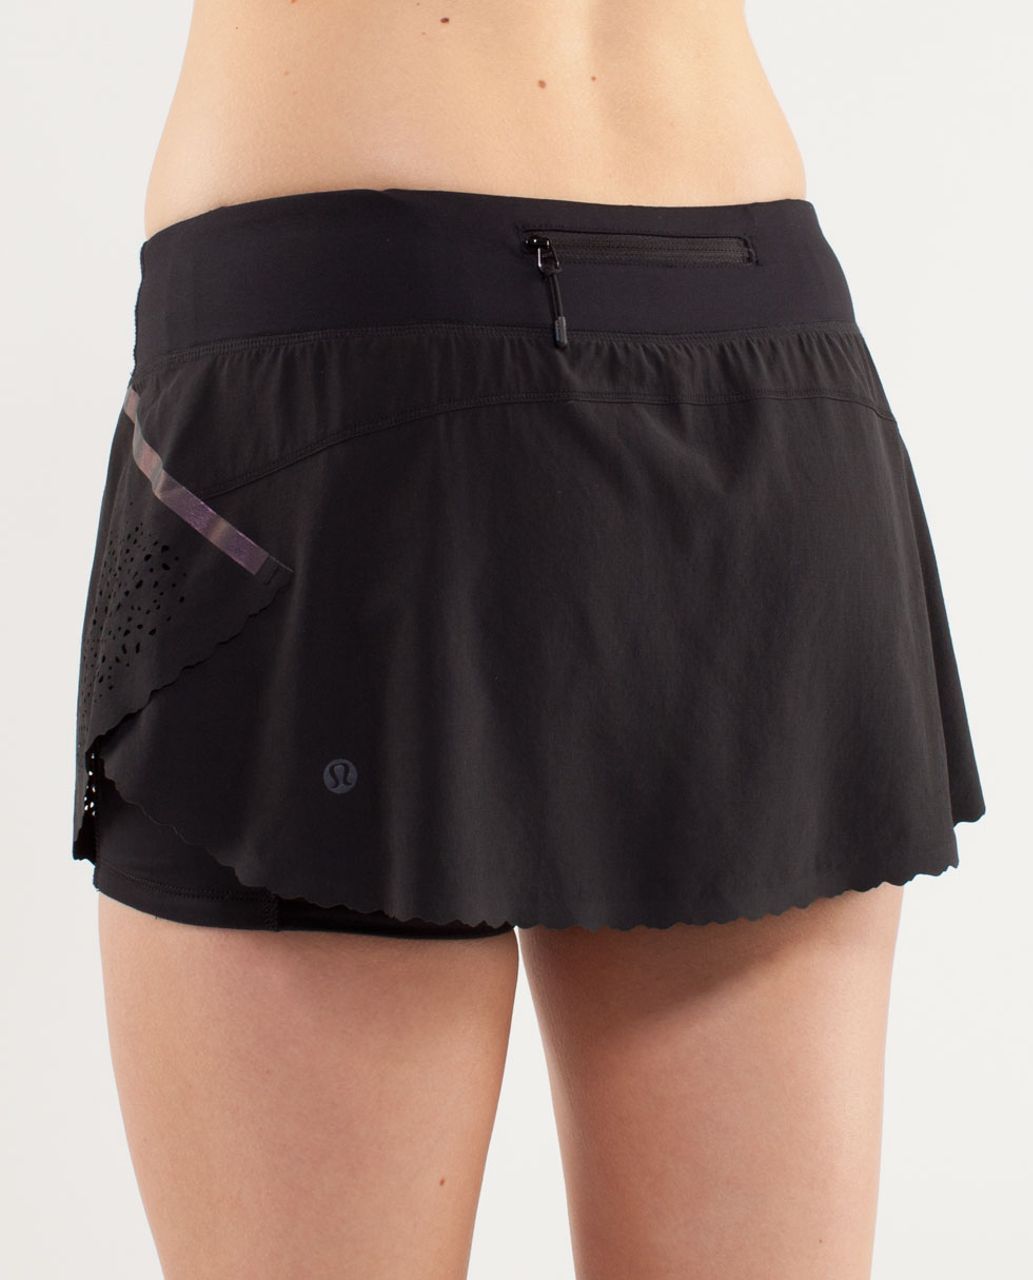 Lululemon Black Reflective Skirt Unlined Size 6